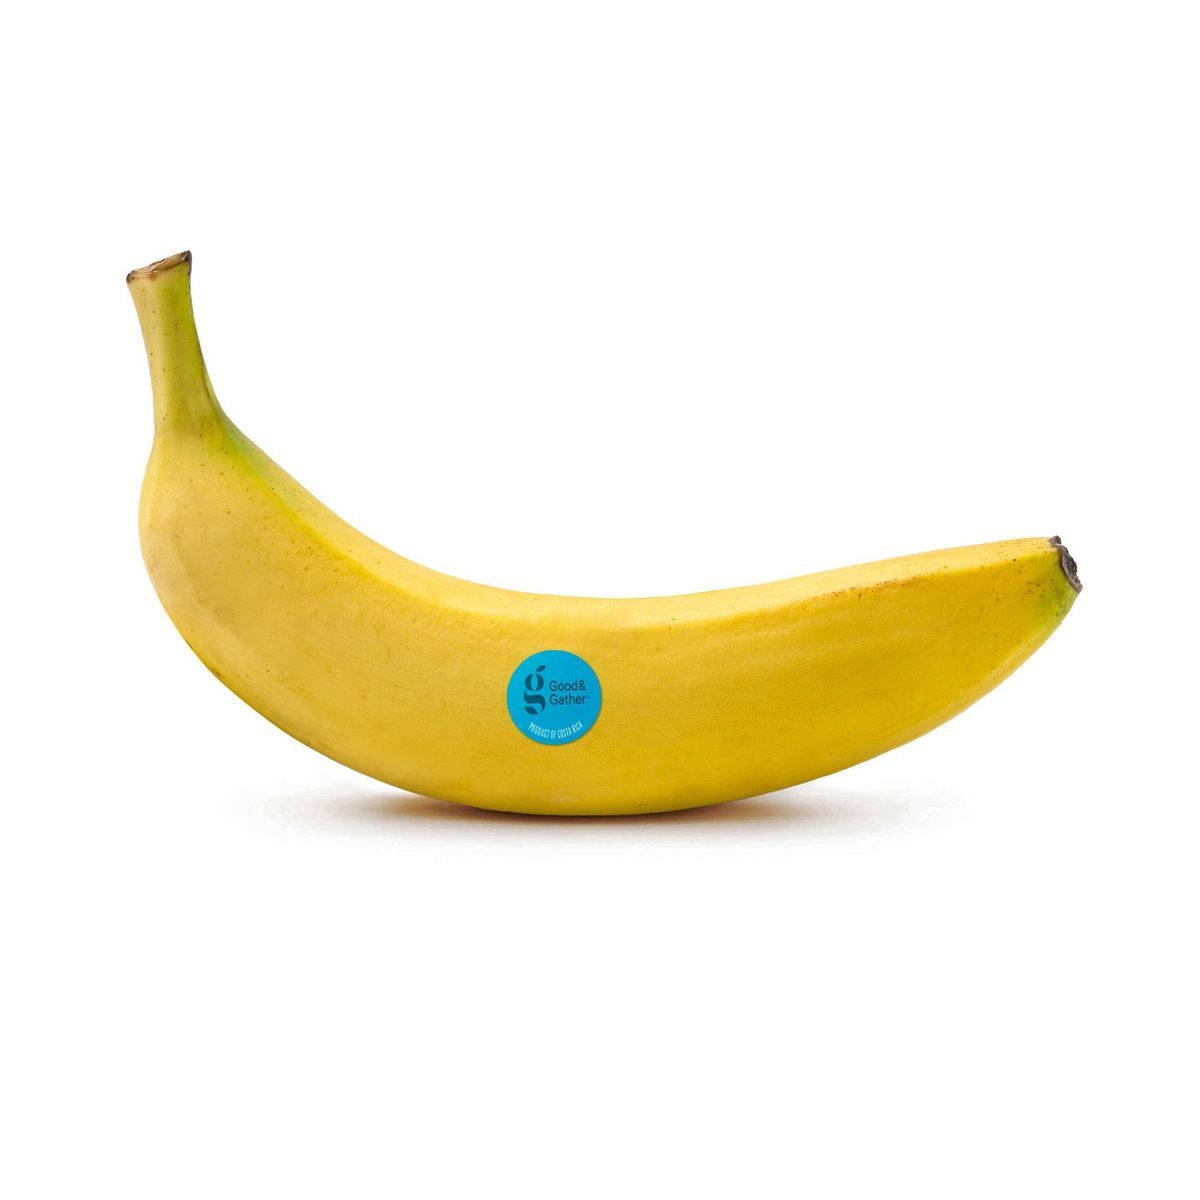 Banana - each - Good & Gather™ | Target